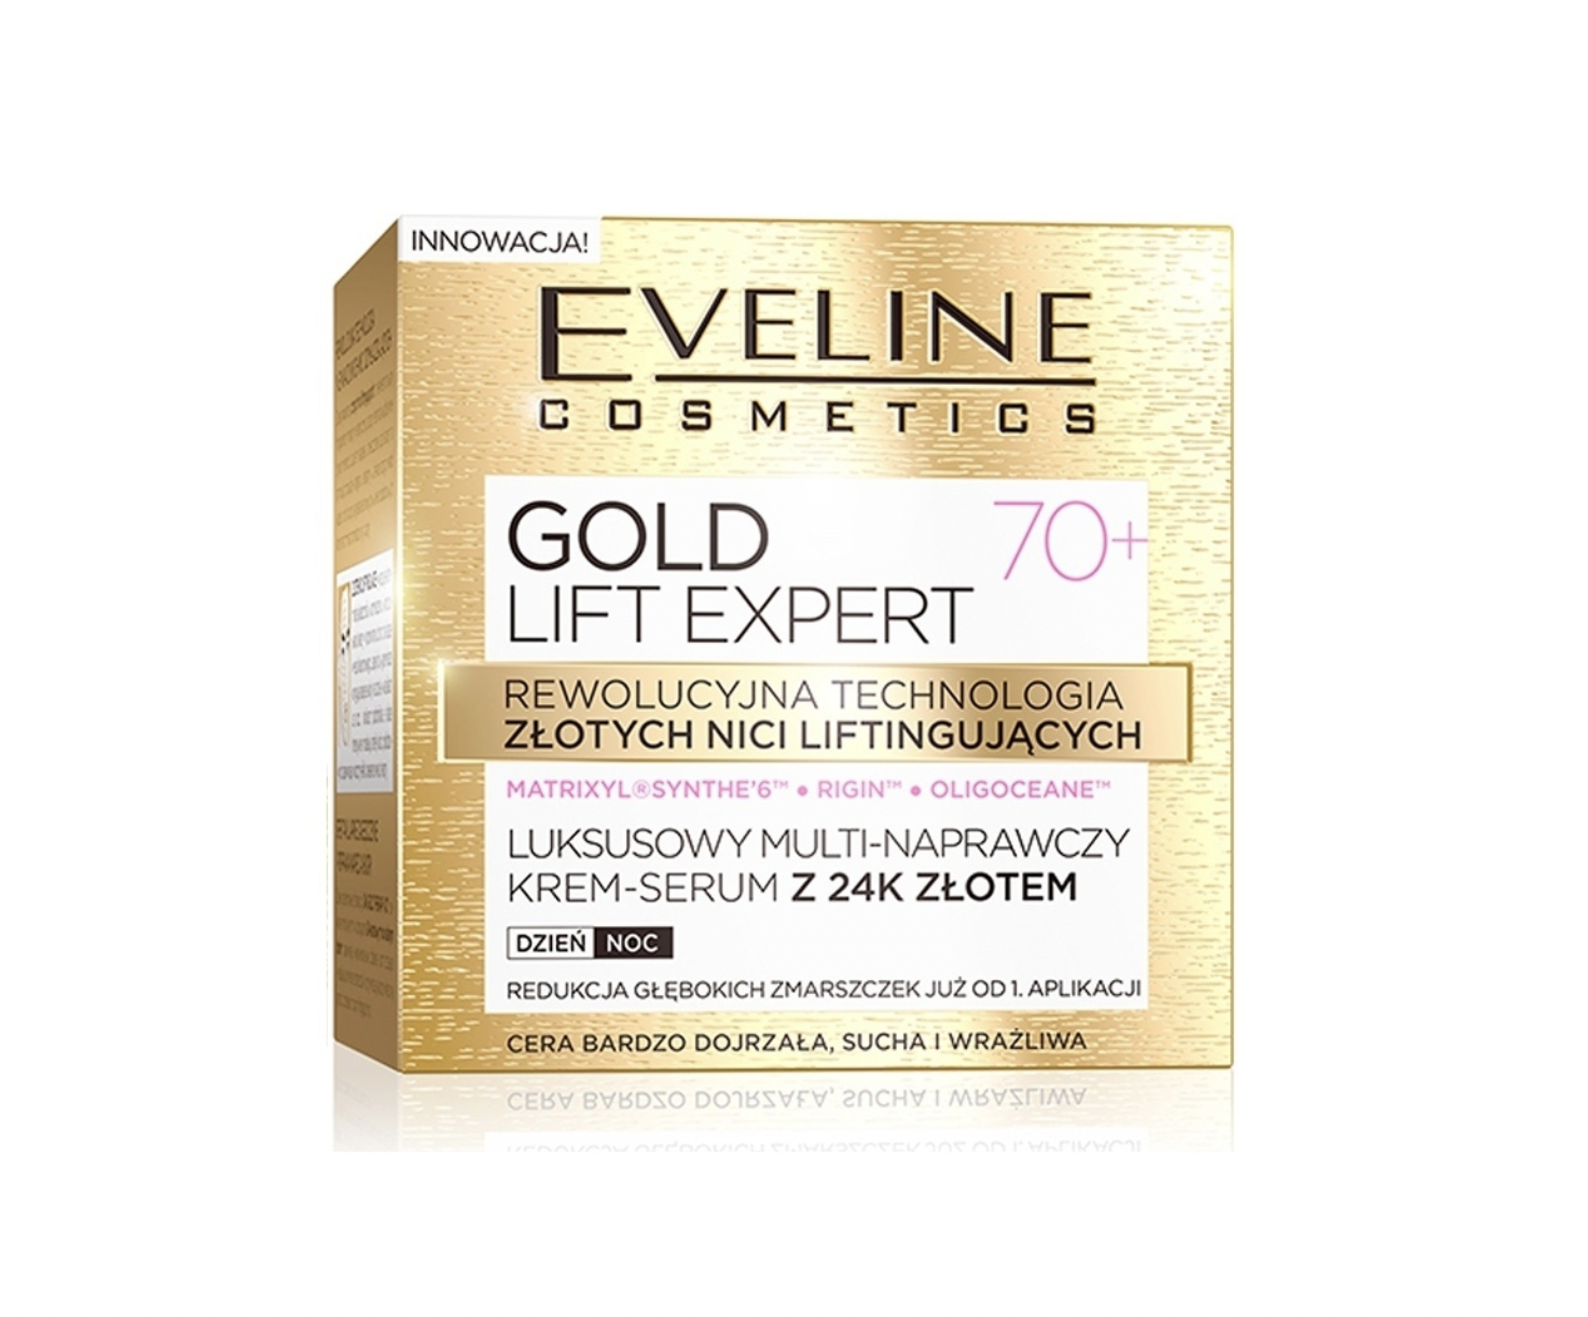 Gold lift. Eveline Gold Lift Expert 70+. Eveline Gold Lift Expert крем-сыворотка 70+. Gold Lift Expert 60+ крем-сыворотка, 50 мл. Eveline косметика Gold Lift Expert.